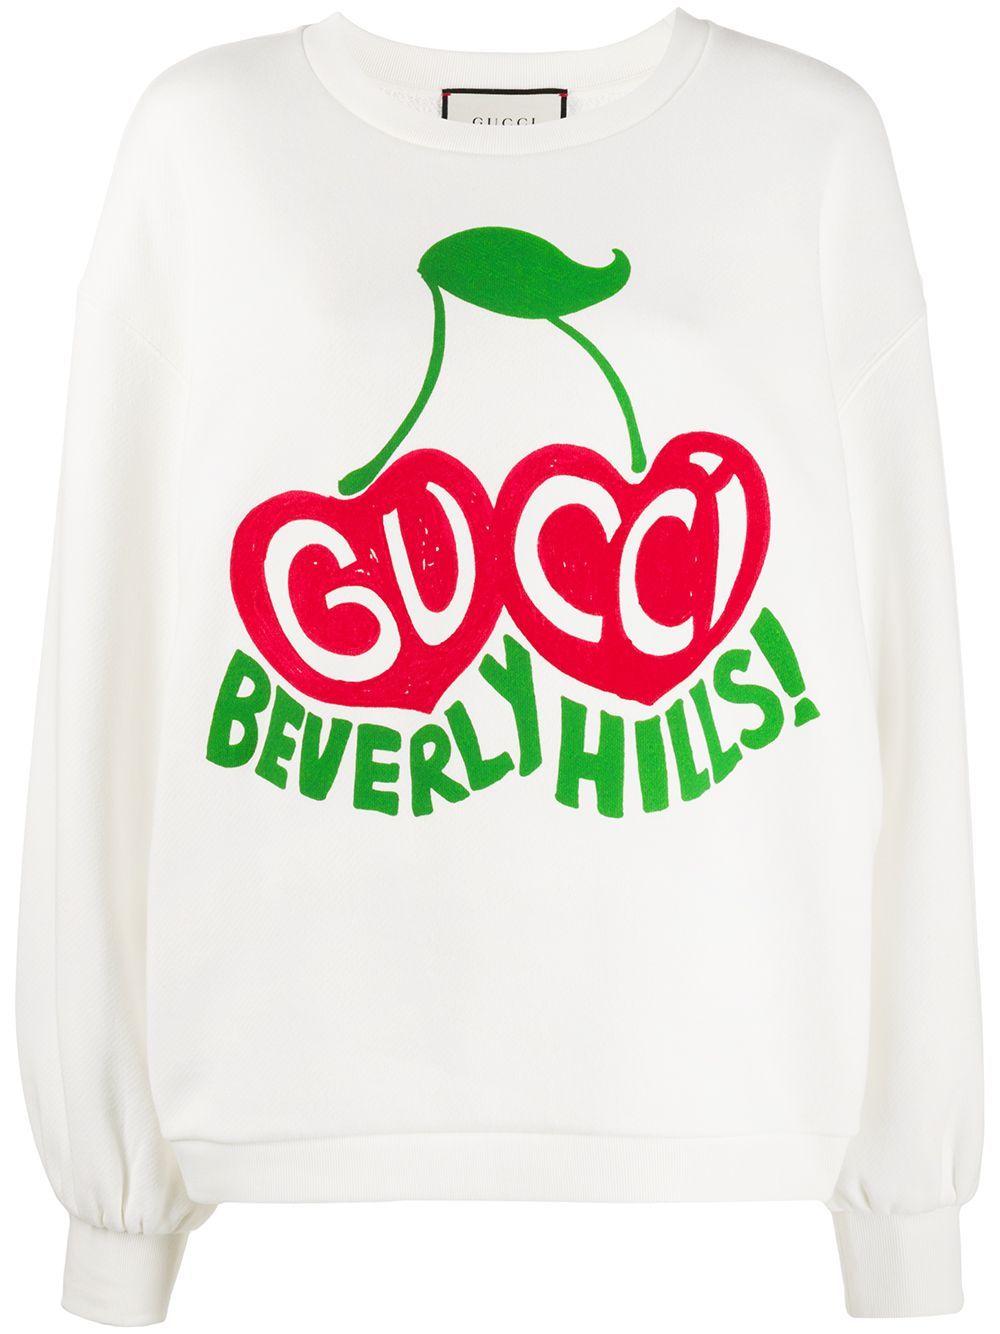 Gucci Cotton "beverly Hills" Cherry Print Sweatshirt in White - Save 59% |  Lyst